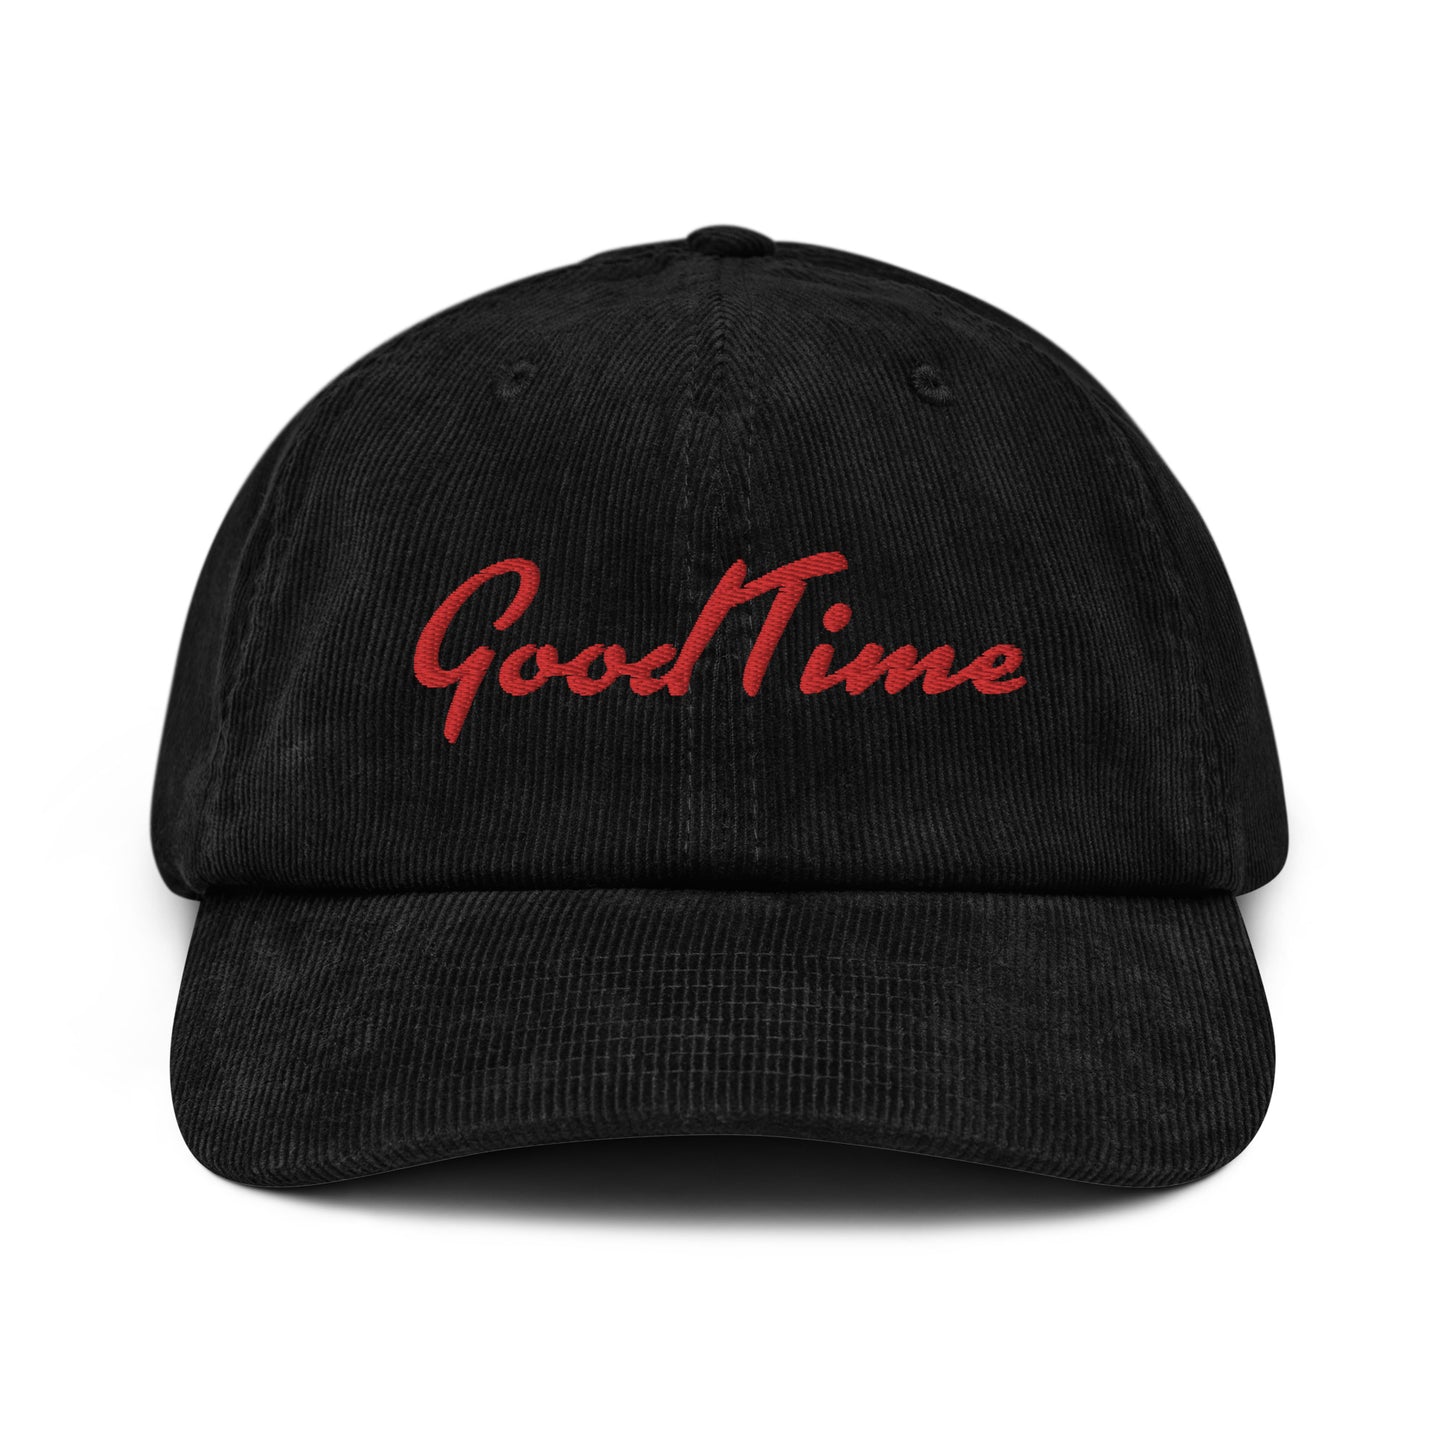 Goodtime hat